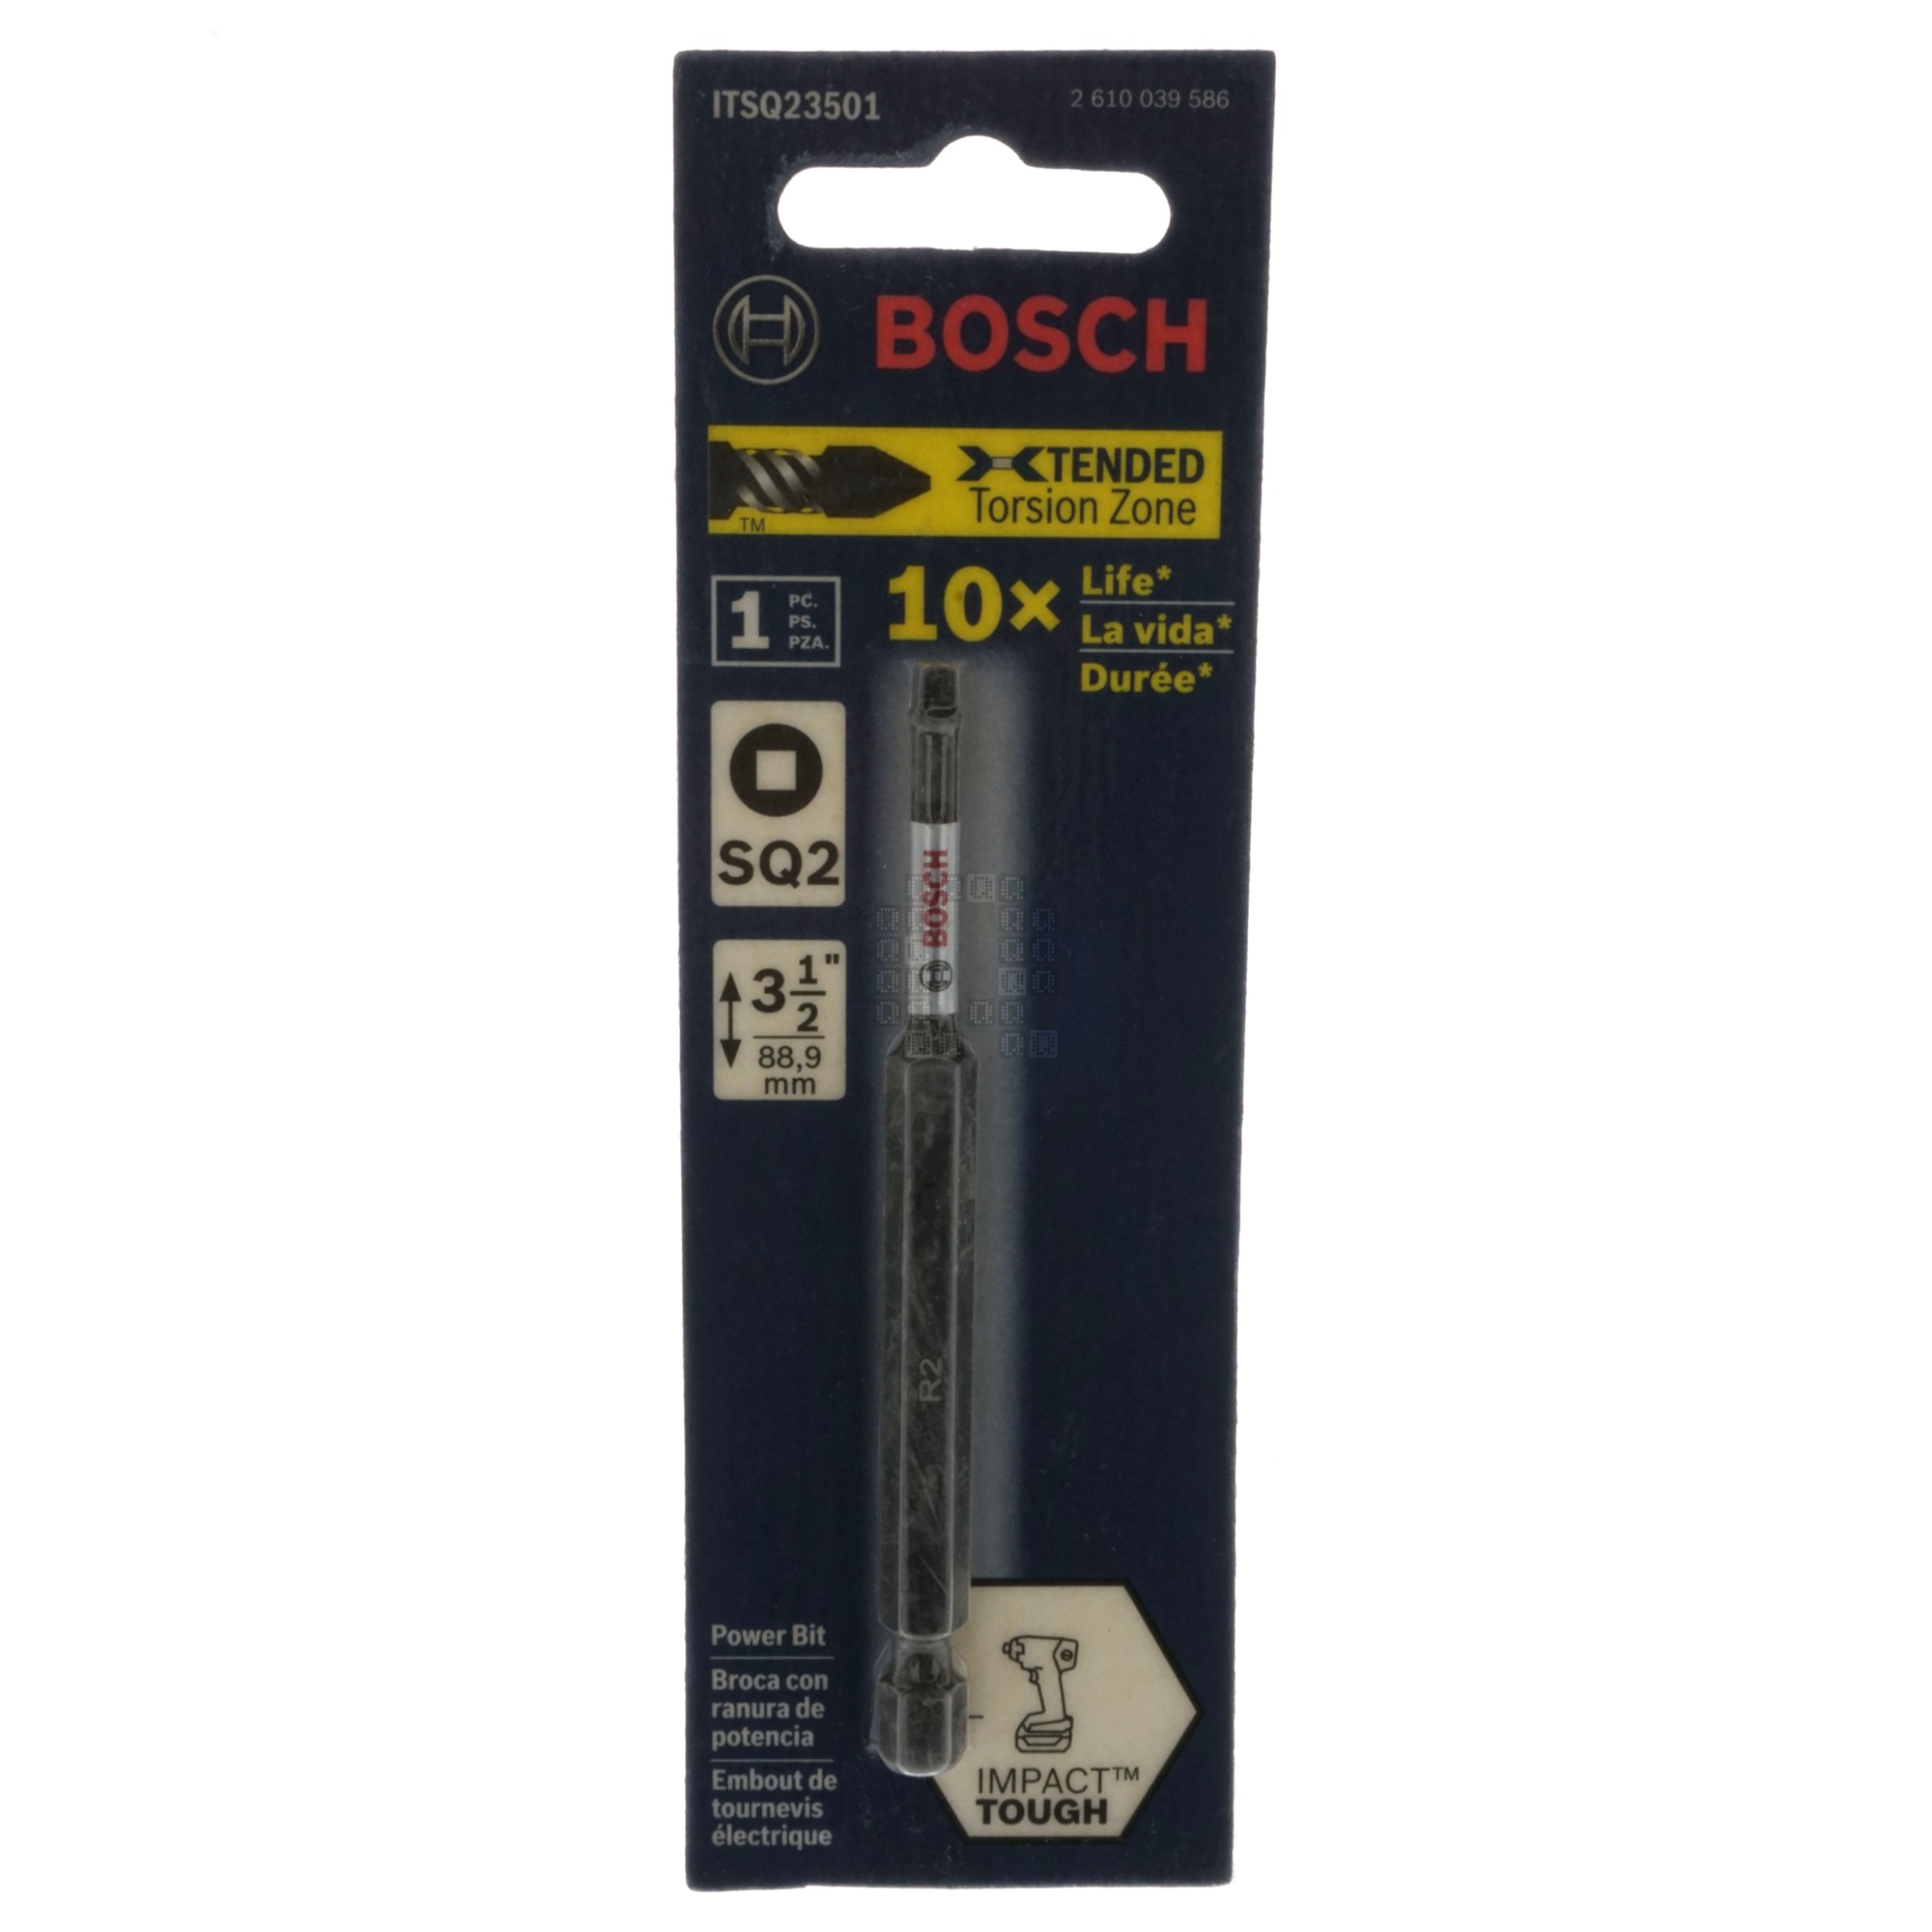 Bosch ITSQ23501 Impact Tough SQ2 #2 Square Power Bit, 3-1/2" Length, 2610039586